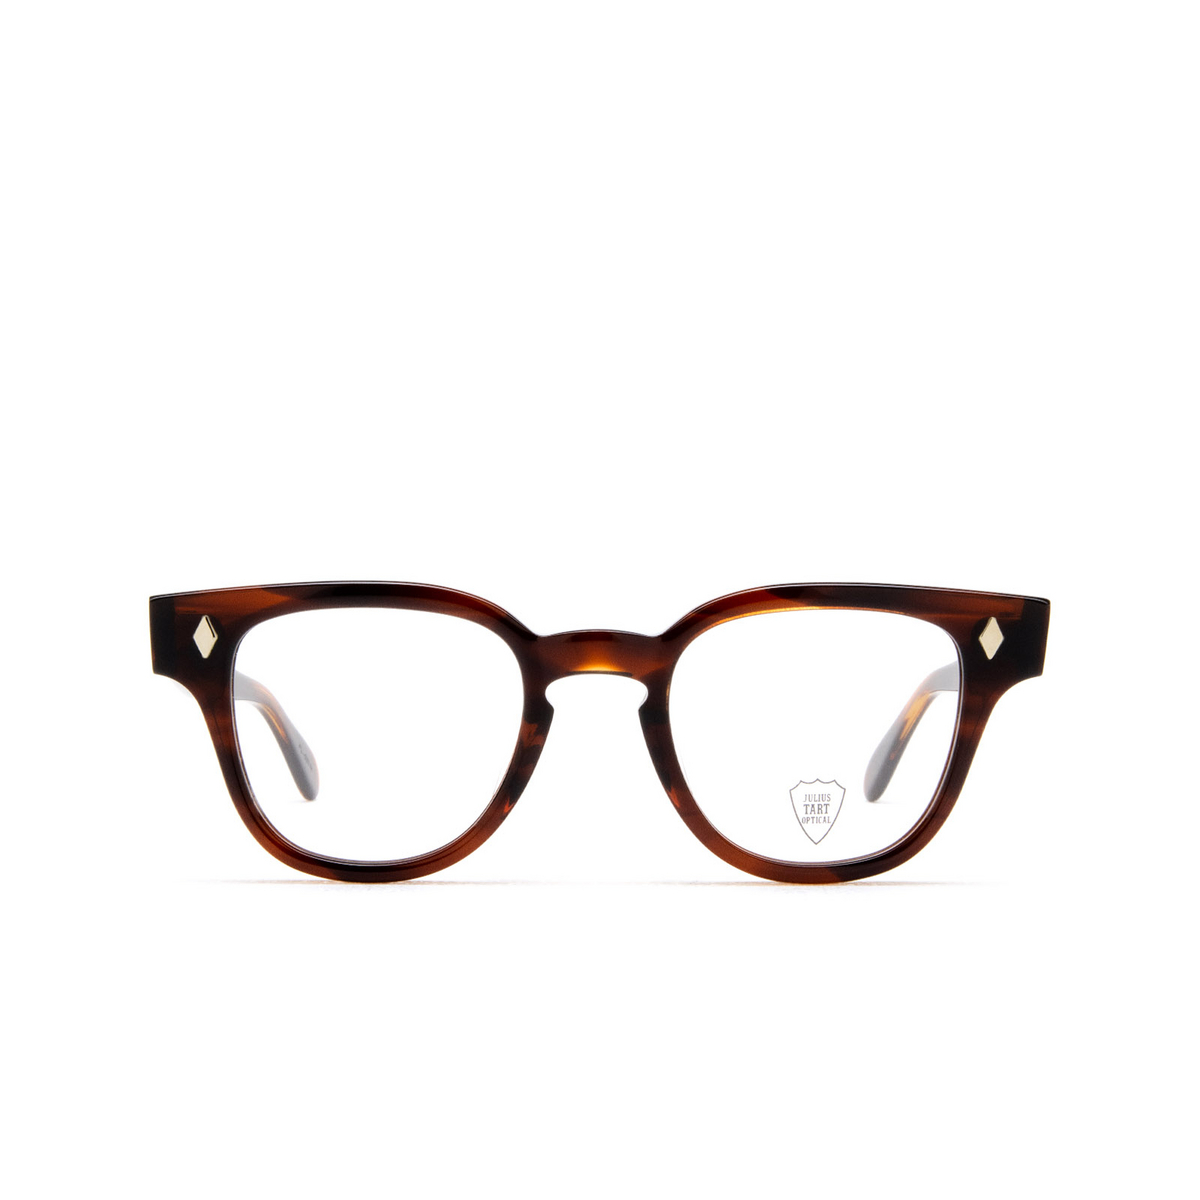 Julius Tart BRYAN Eyeglasses DEMI AMBER - front view